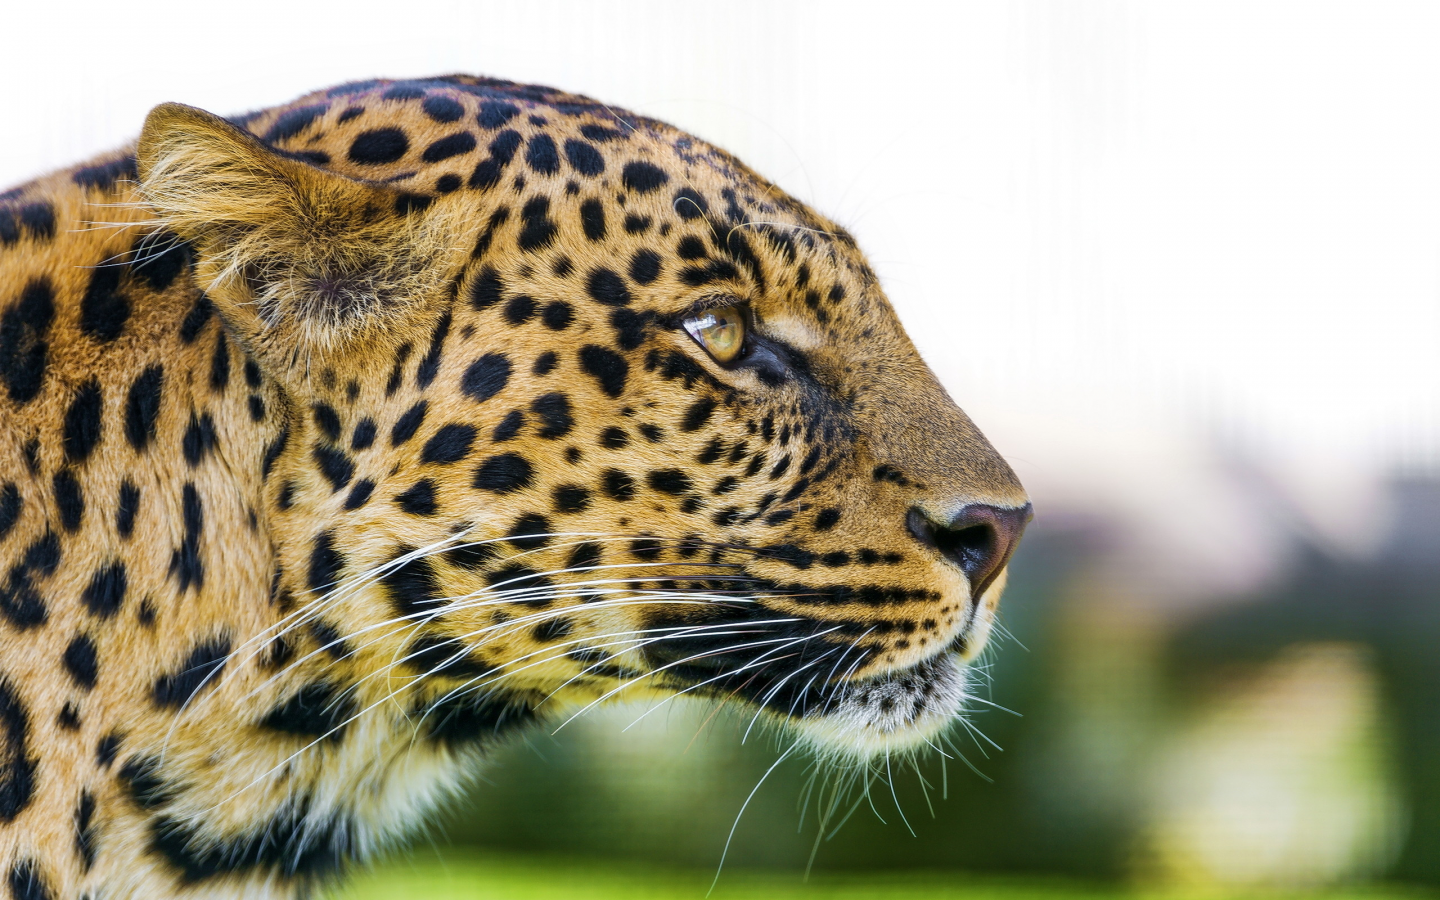 хищник, профиль, морда, взгляд, leopard, леопард, panthera pardus